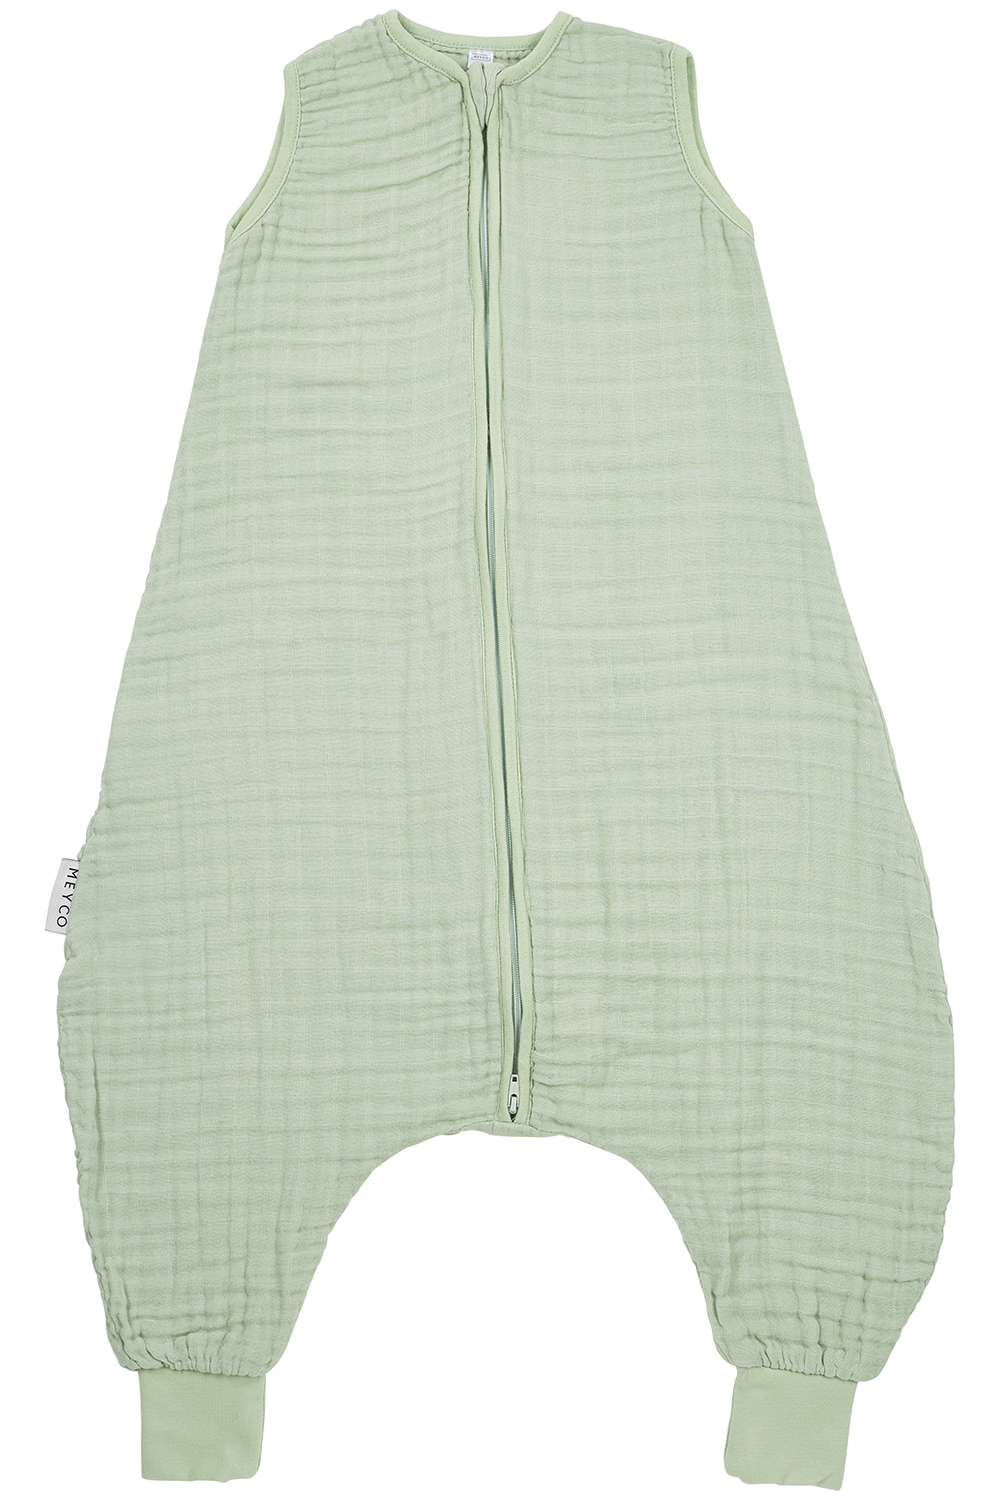 Baby zomer slaapoverall jumper pre-washed hydrofiel Uni - soft green - 80cm